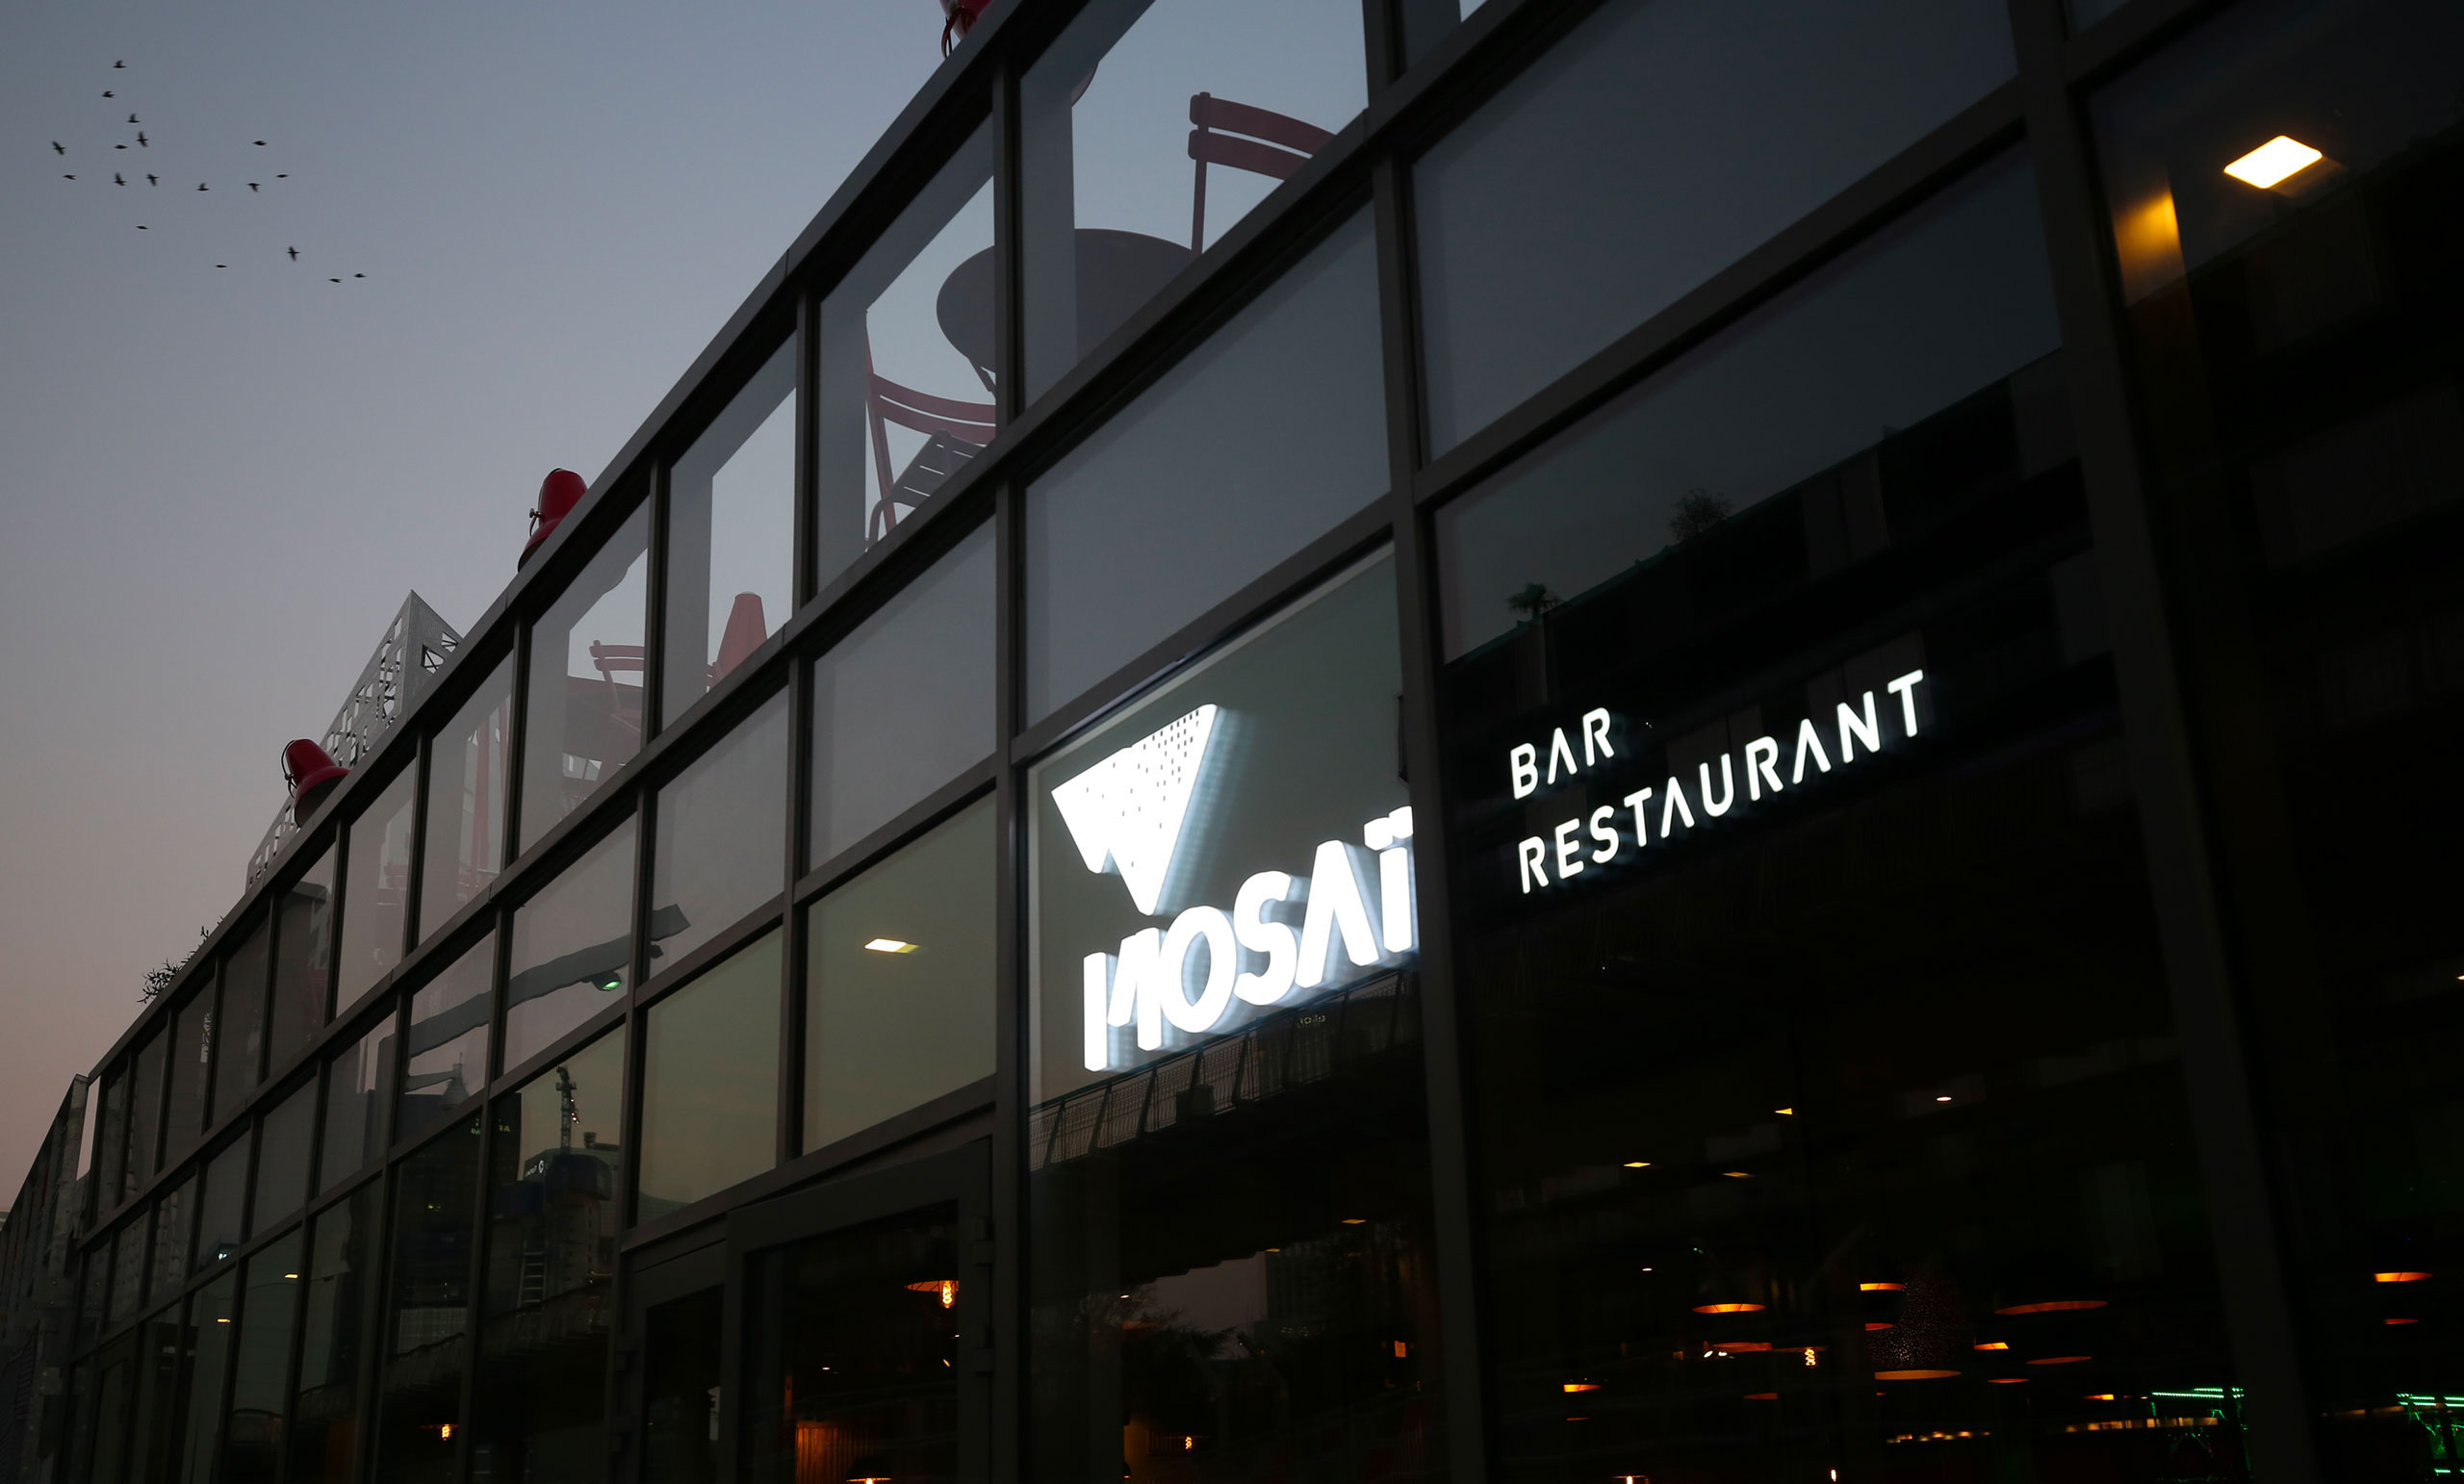 Mosaï Restaurant